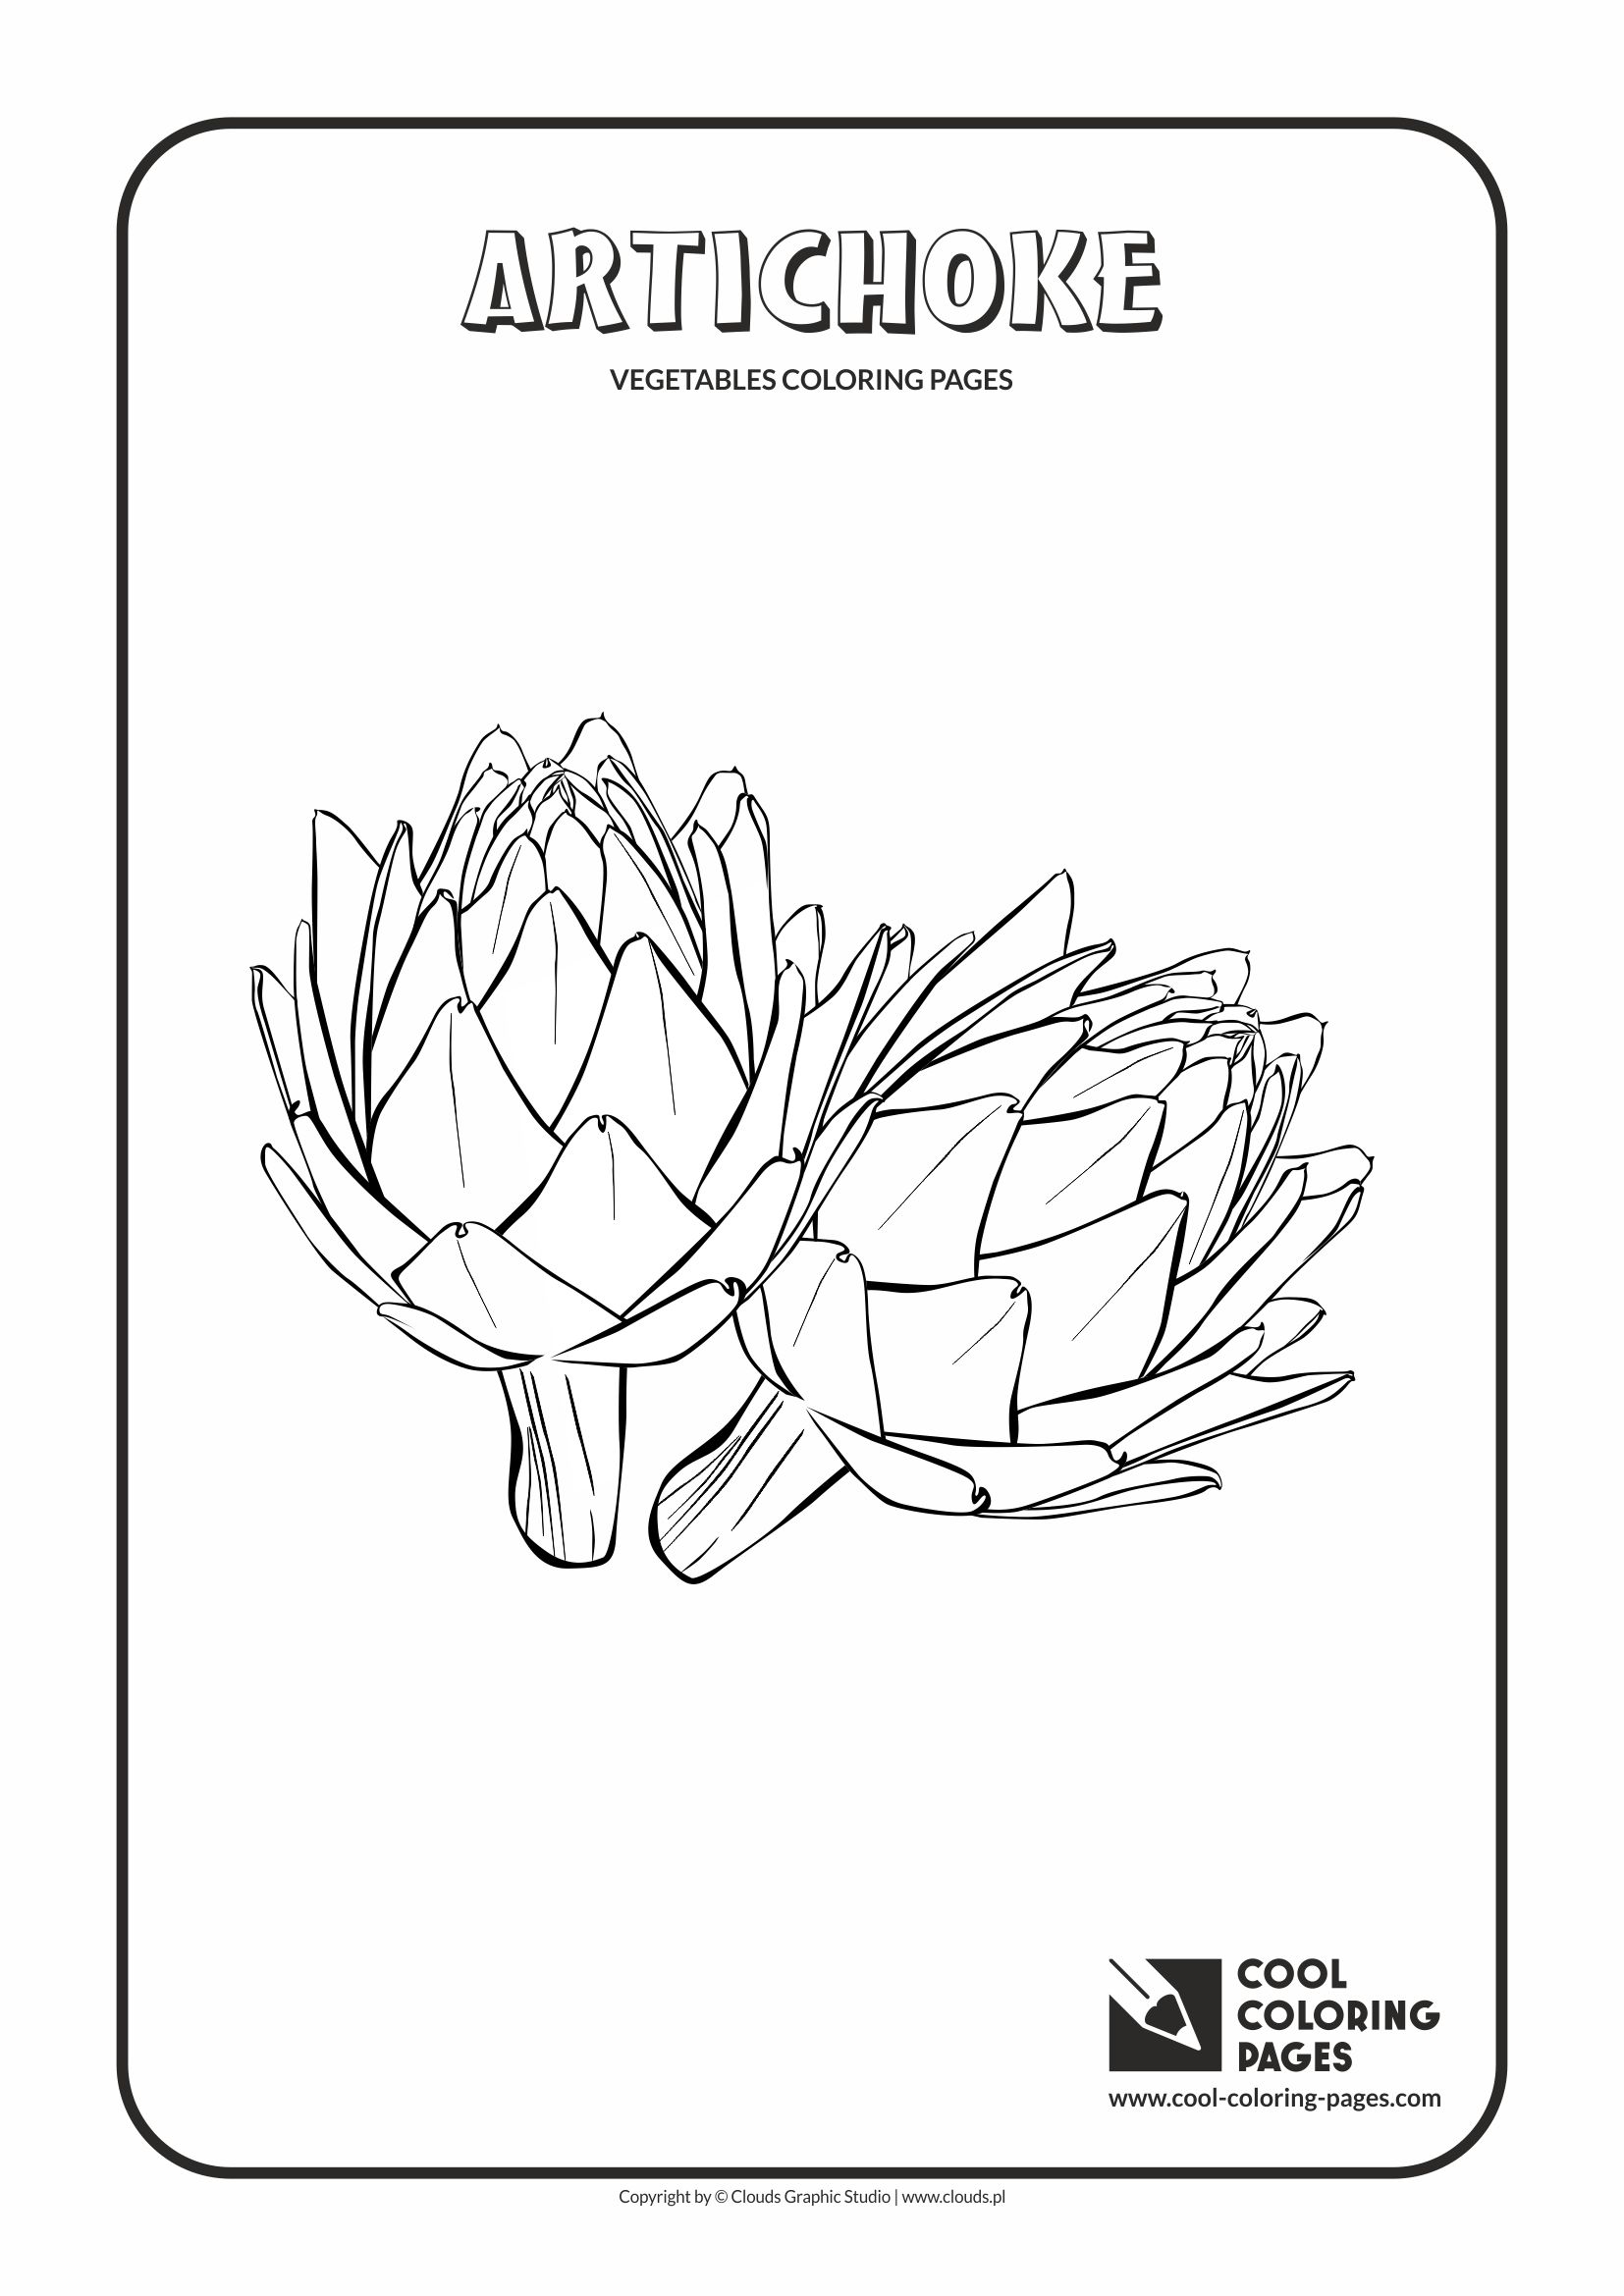 Cool Coloring Pages - Plants / Artichoke / Coloring page with artichoke